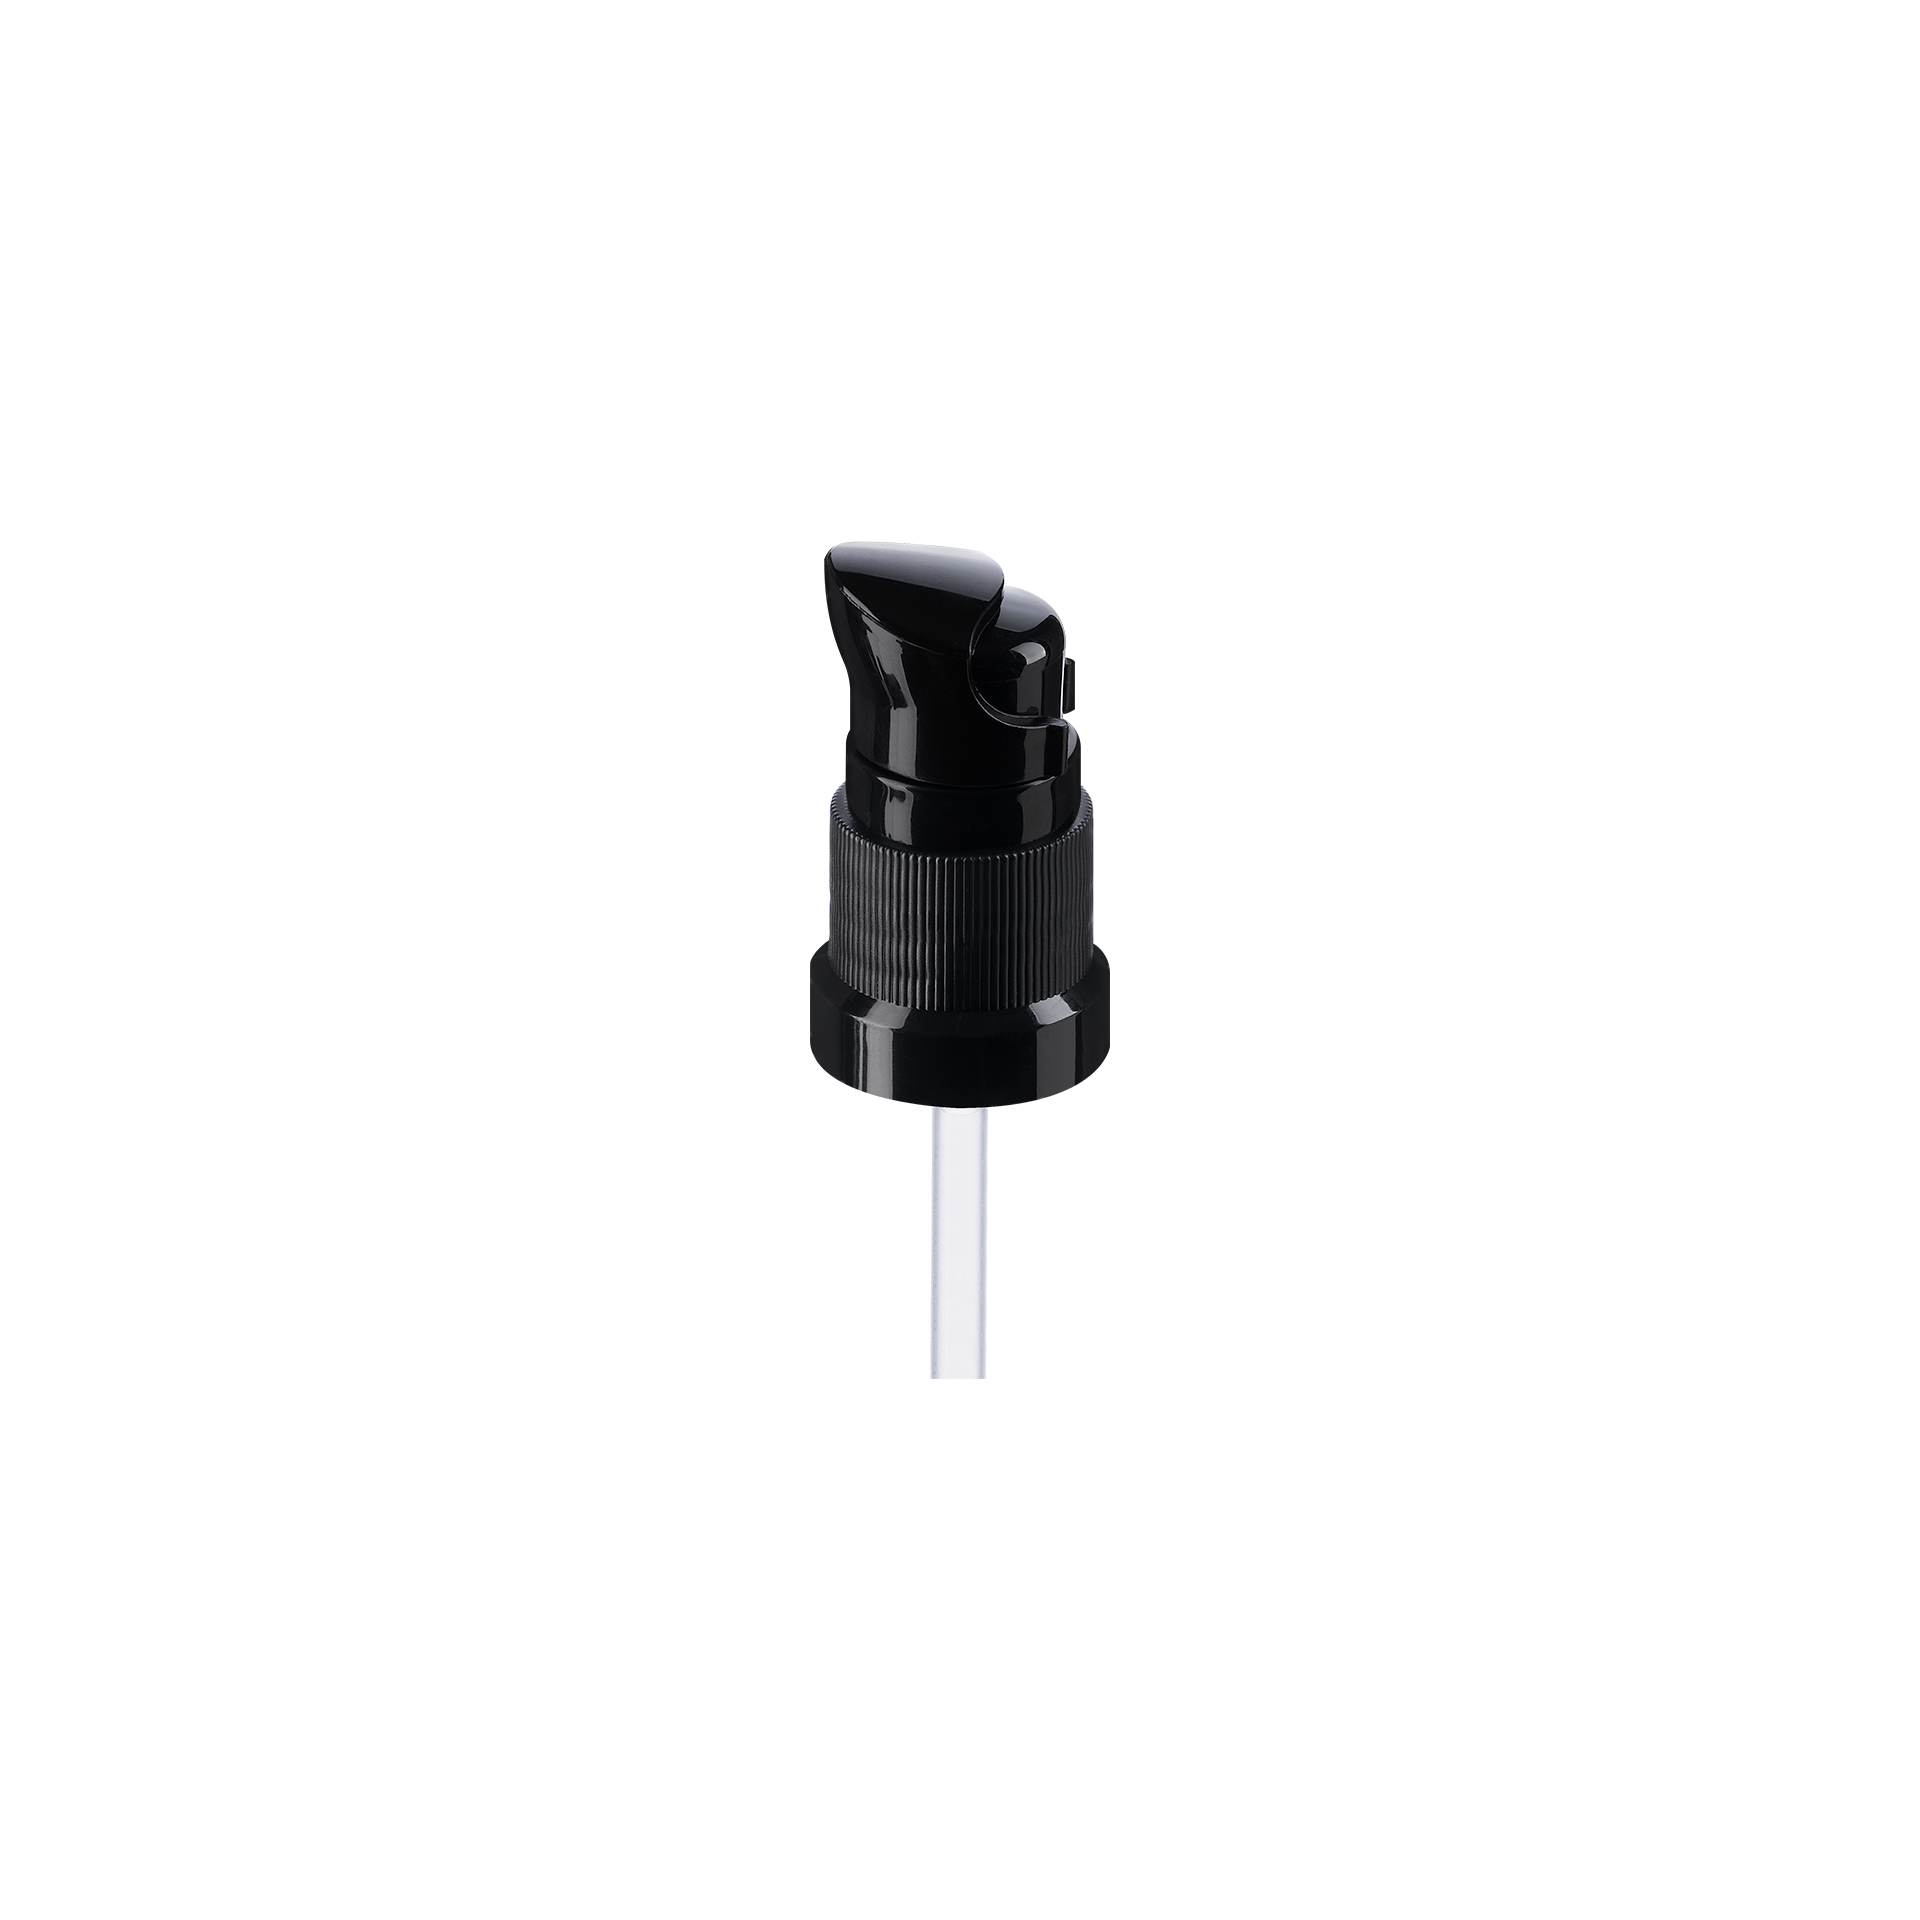 Lotion pump Metropolitan DIN18, PP, black, dose 0.15ml, black security clip (Jasmine 20)